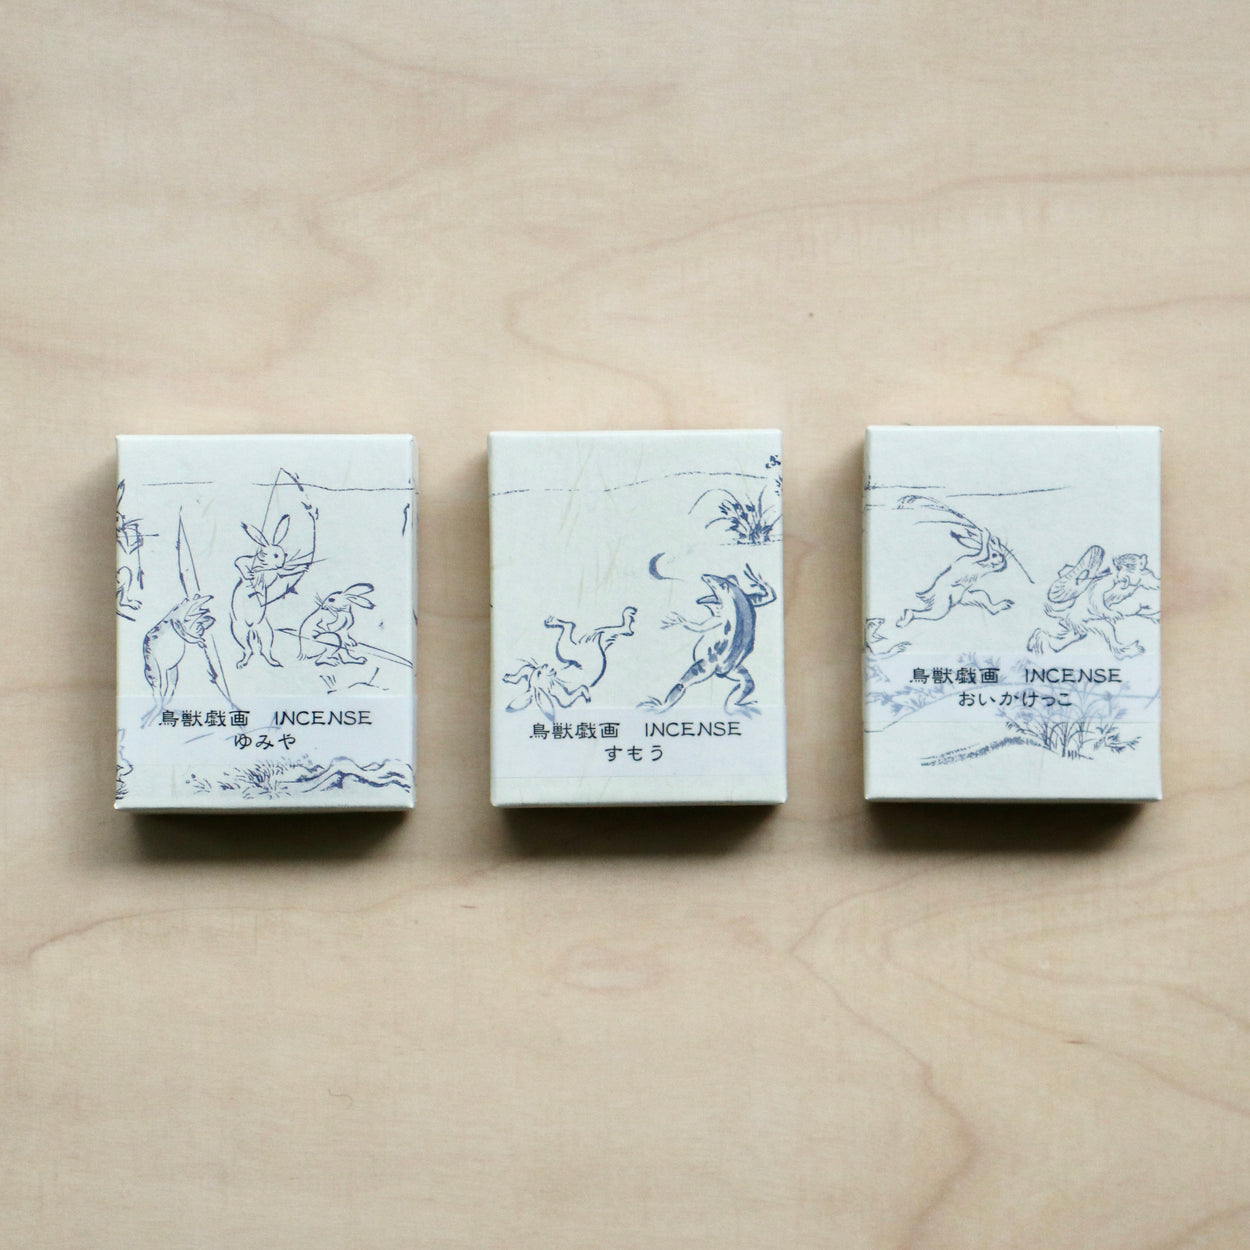 Set of three Japanese Incense Sticks boxes.